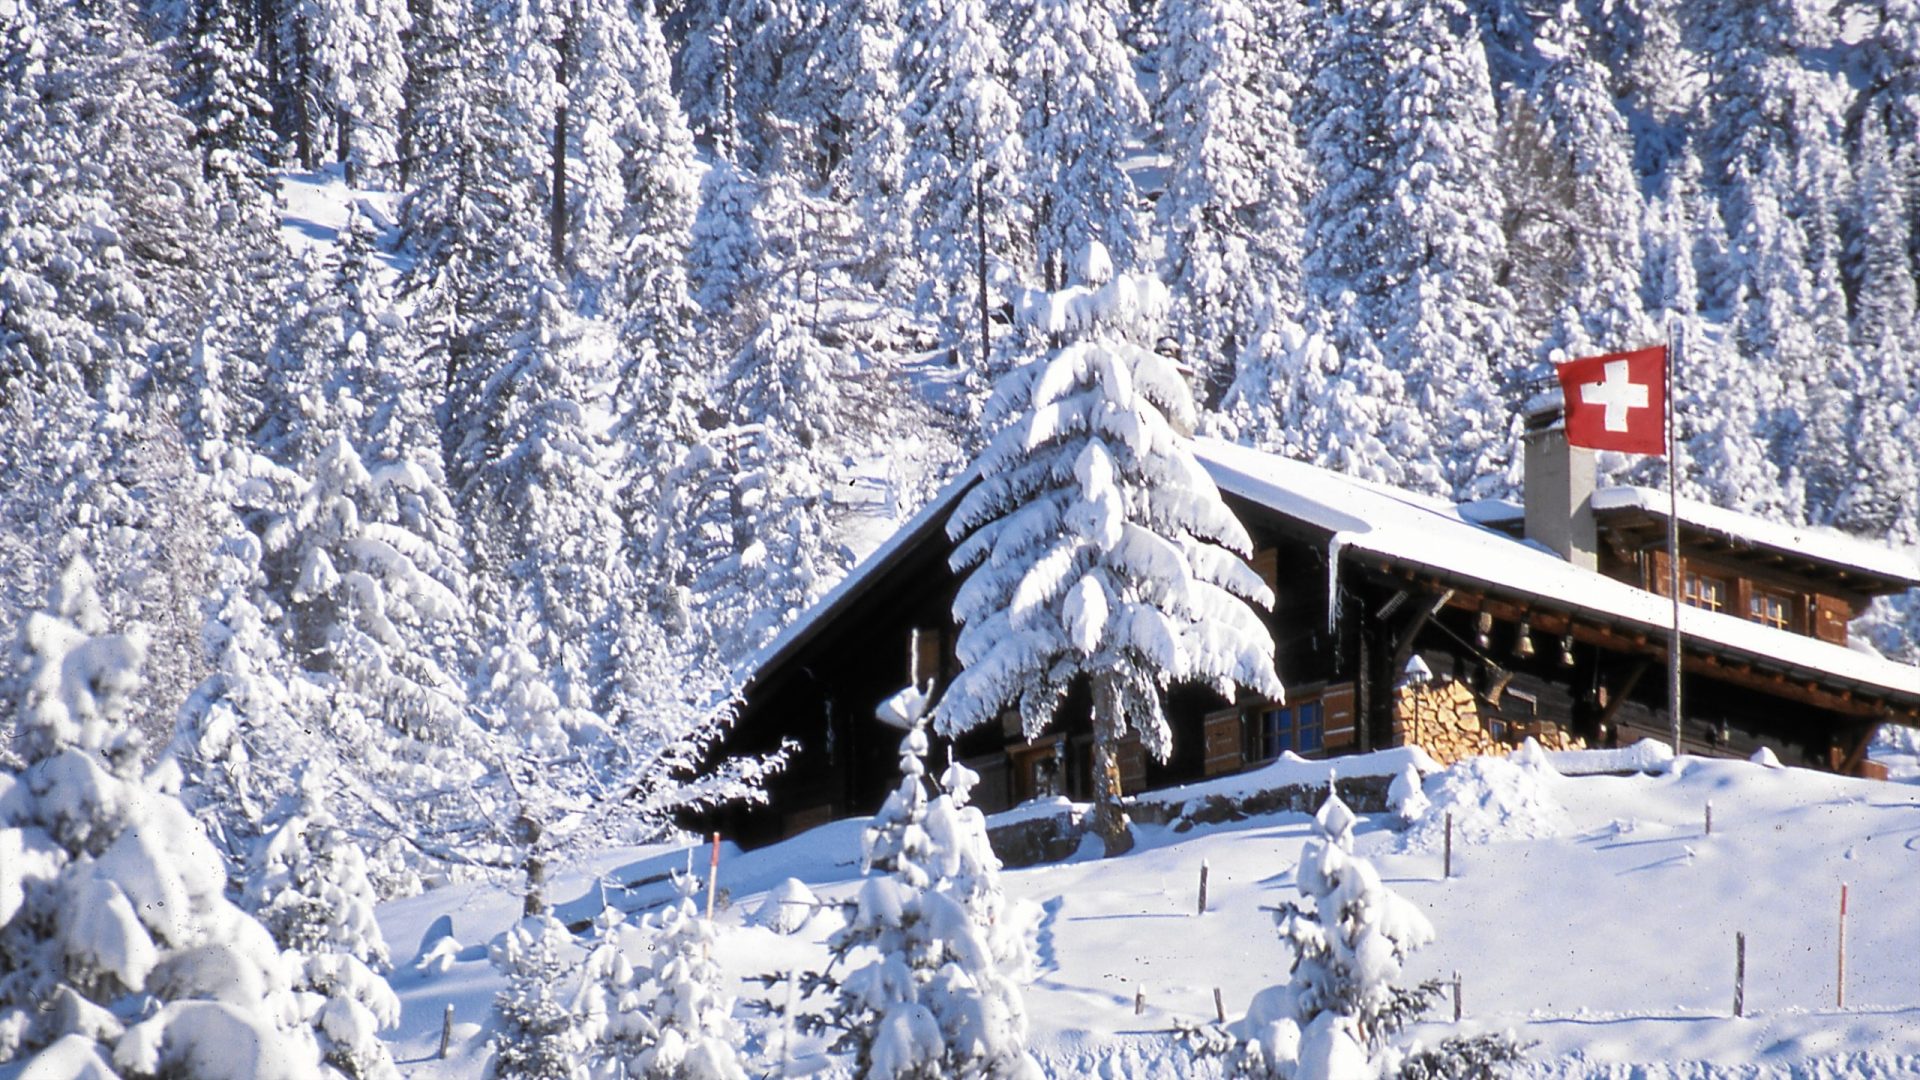 Ski Property in the Swiss Alps